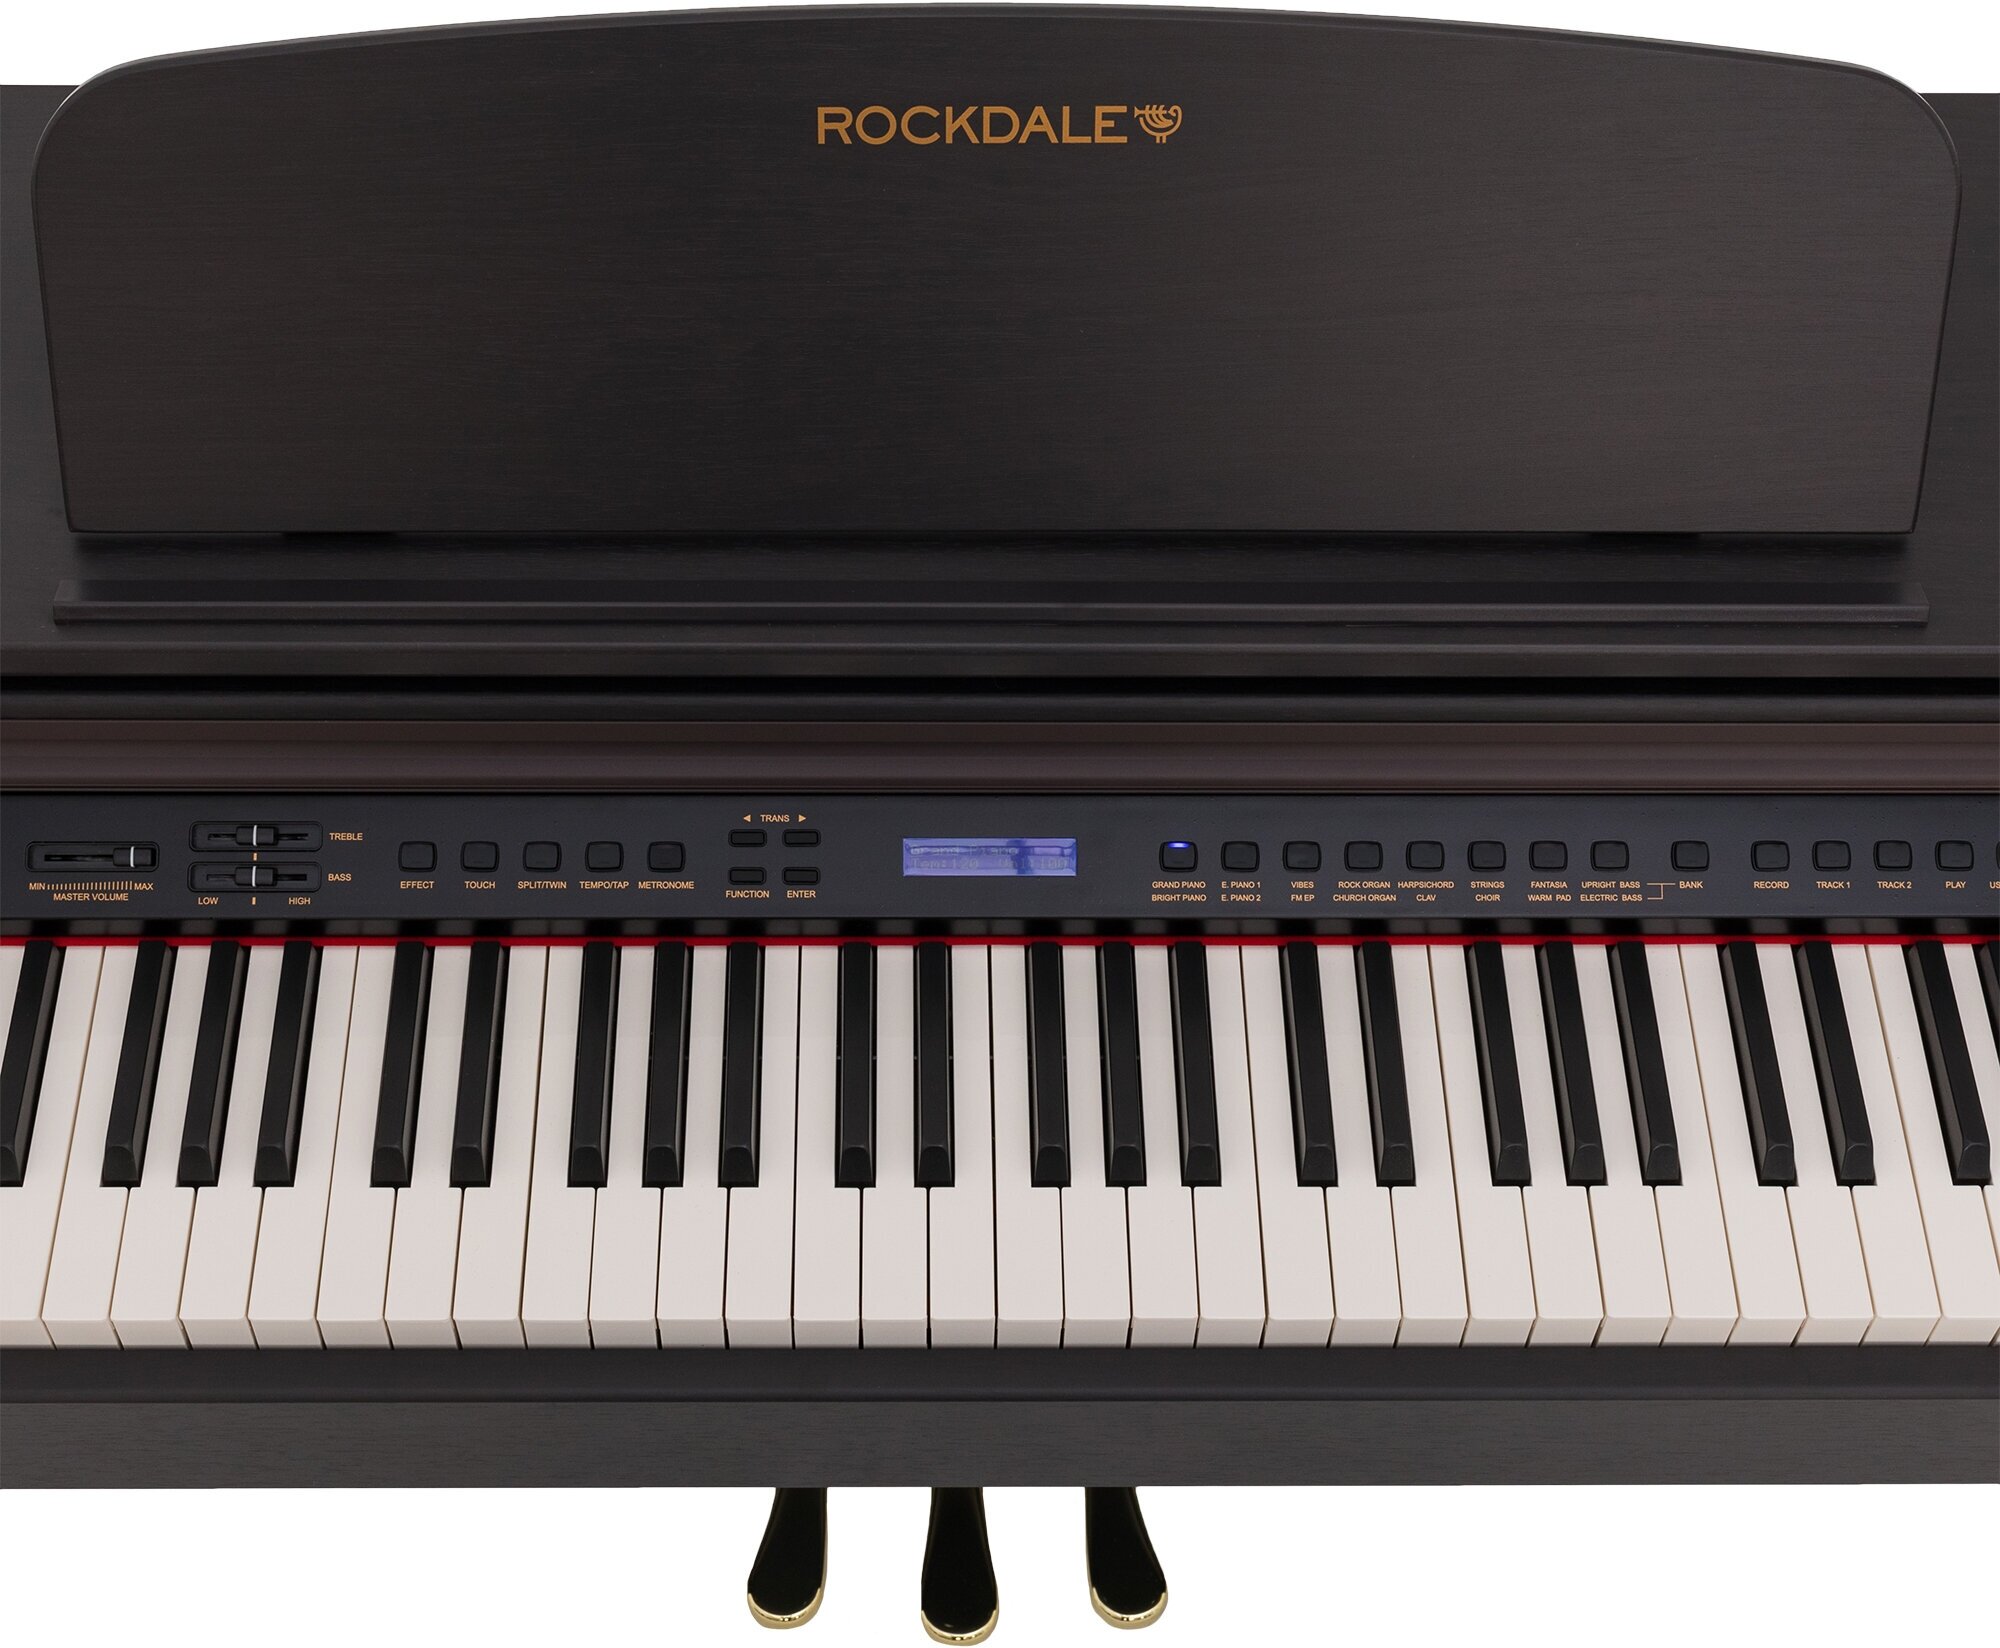 Цифровое пианино Rockdale RDP-7088